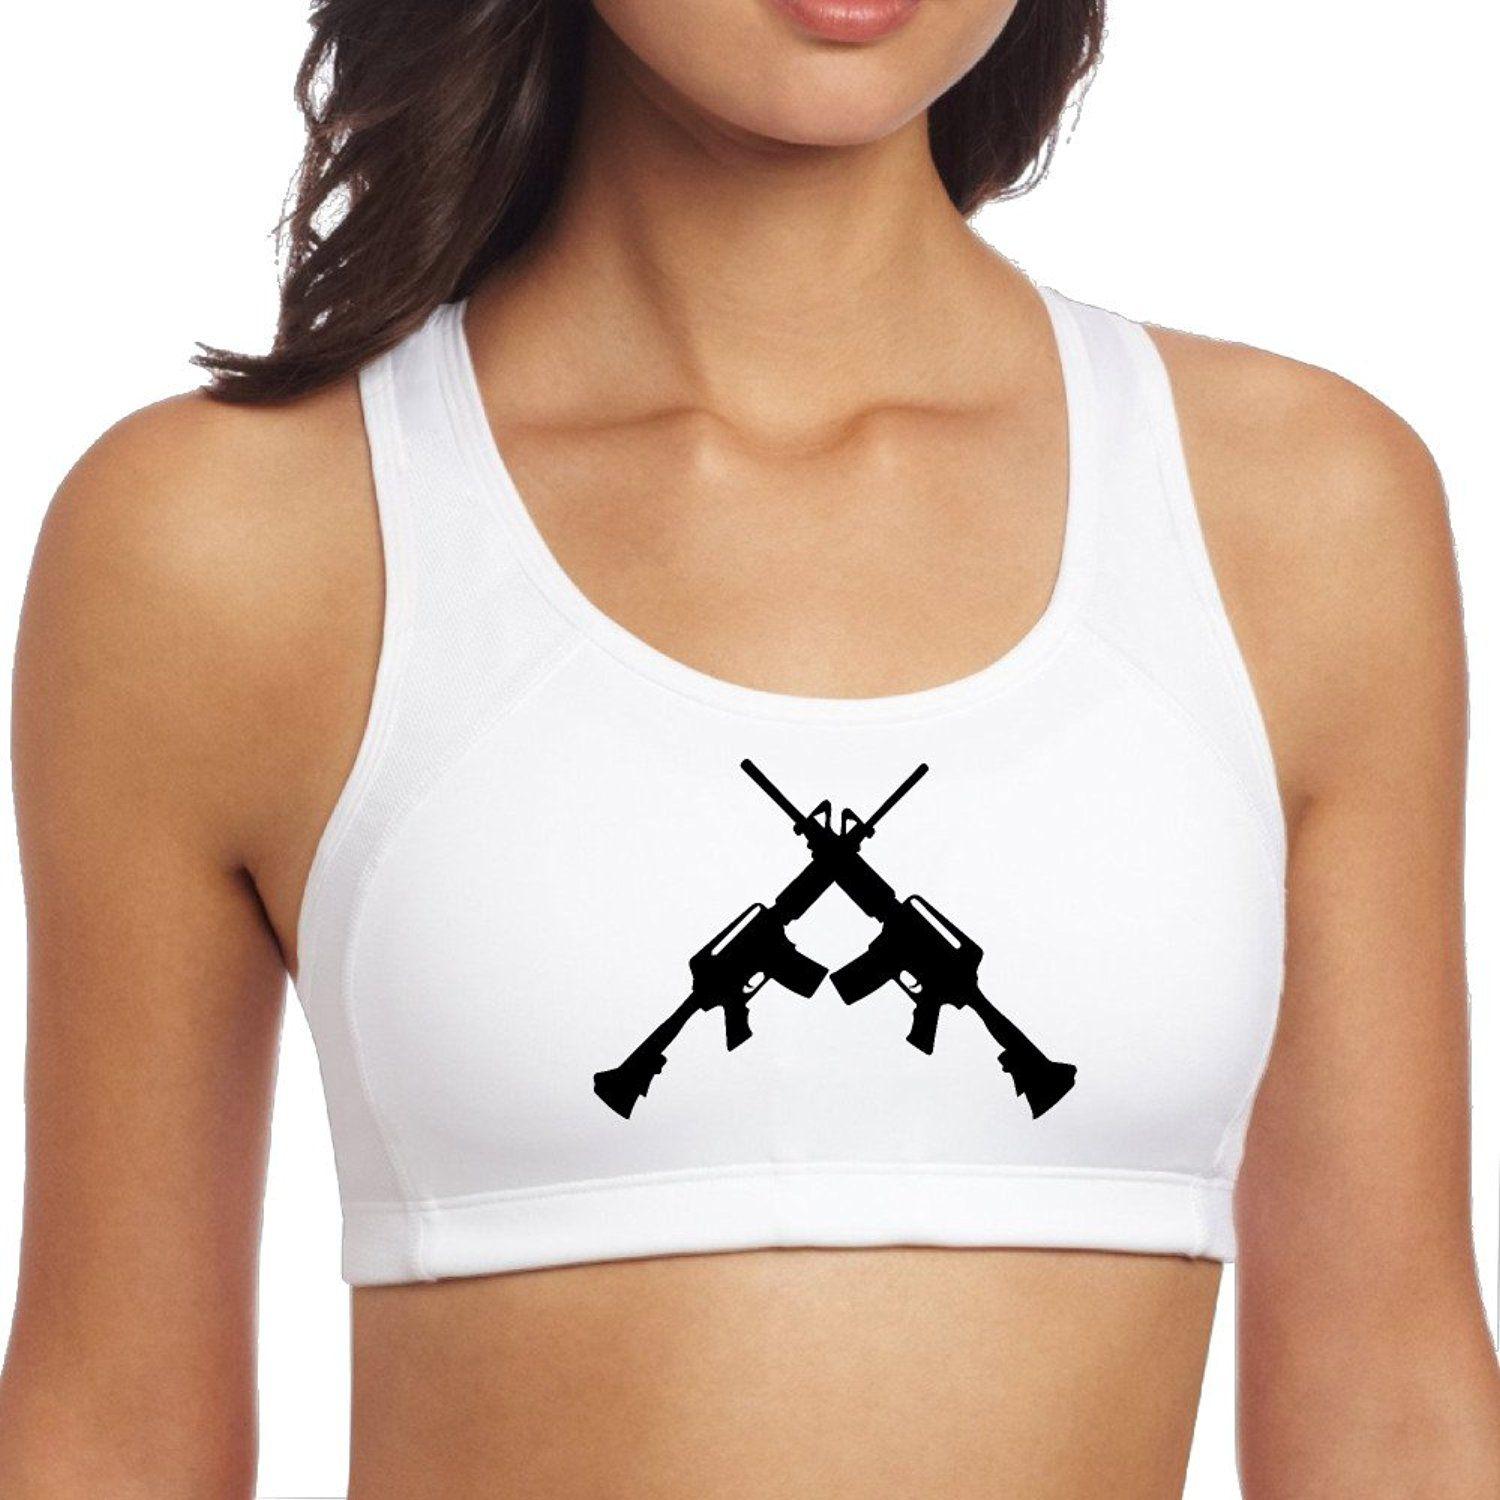 M16 Logo - Buy Womens Cross Guns AR15 M16 Logo Yoga Sports Bras in Cheap Price ...